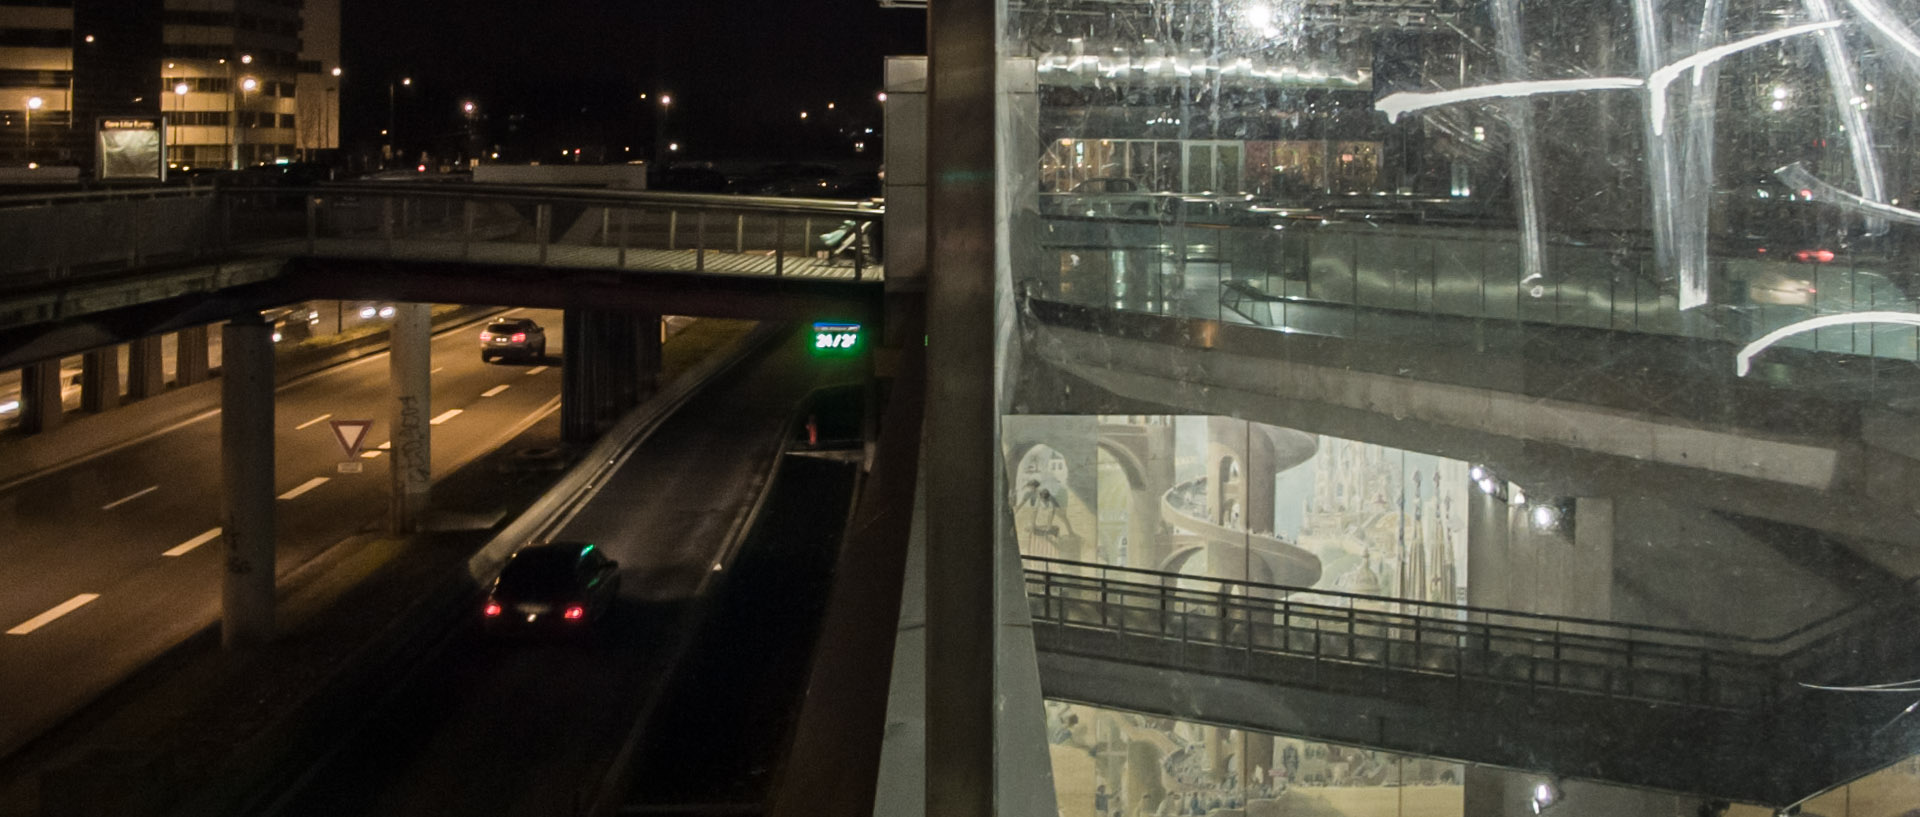 Samedi 18 janvier 2014, 18:34, place Valladolid, station de métro Lille Europe